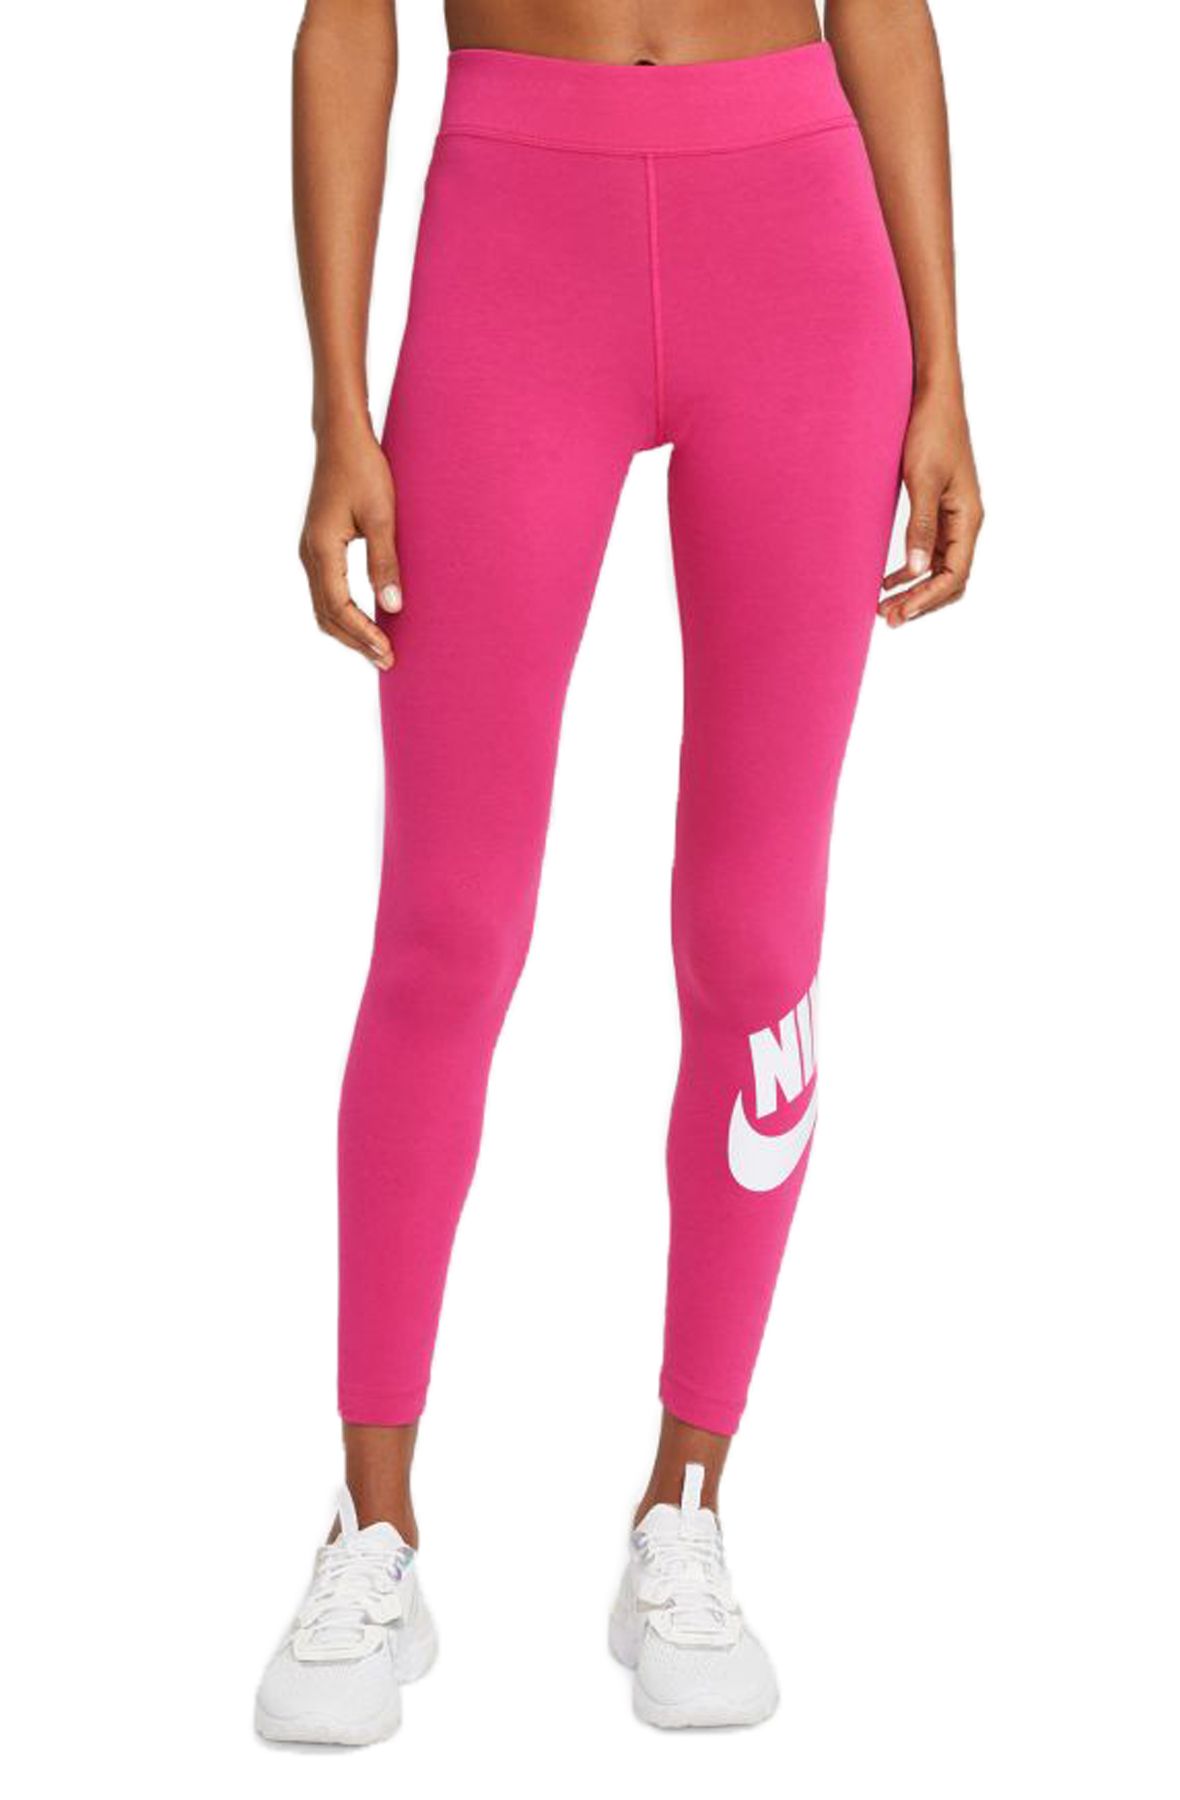 Women's leggings Nike Dri-Fit One High-Rise Leggings - fireberry/white